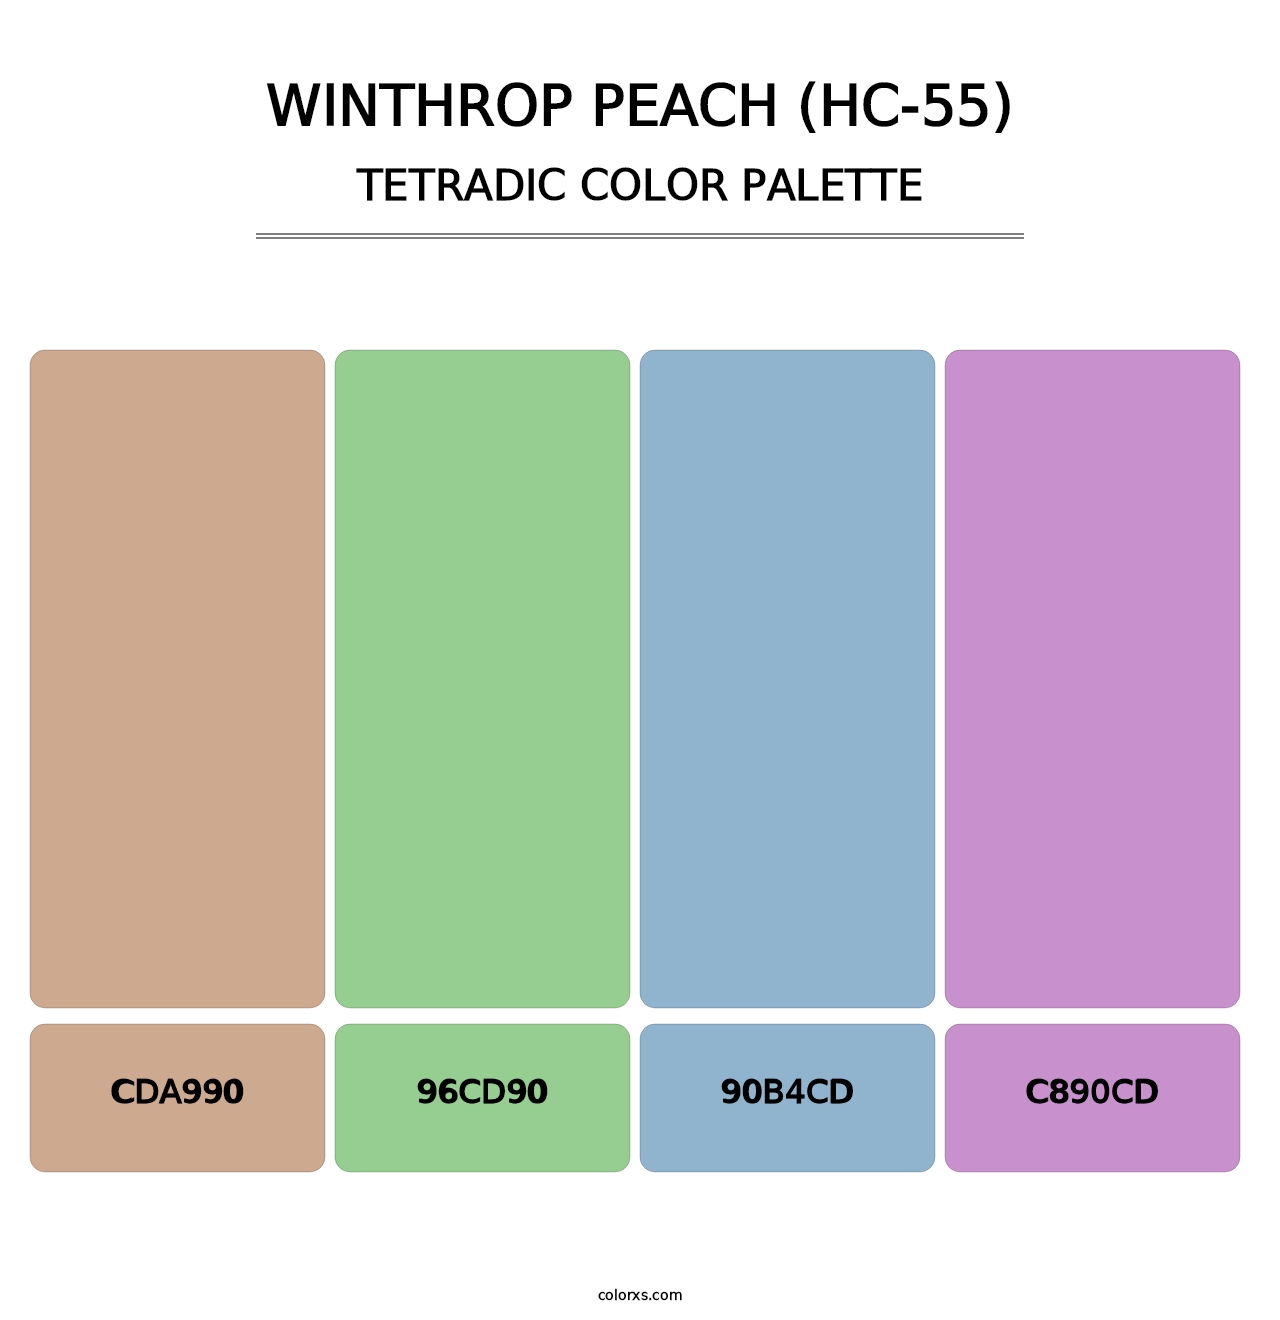 Winthrop Peach (HC-55) - Tetradic Color Palette